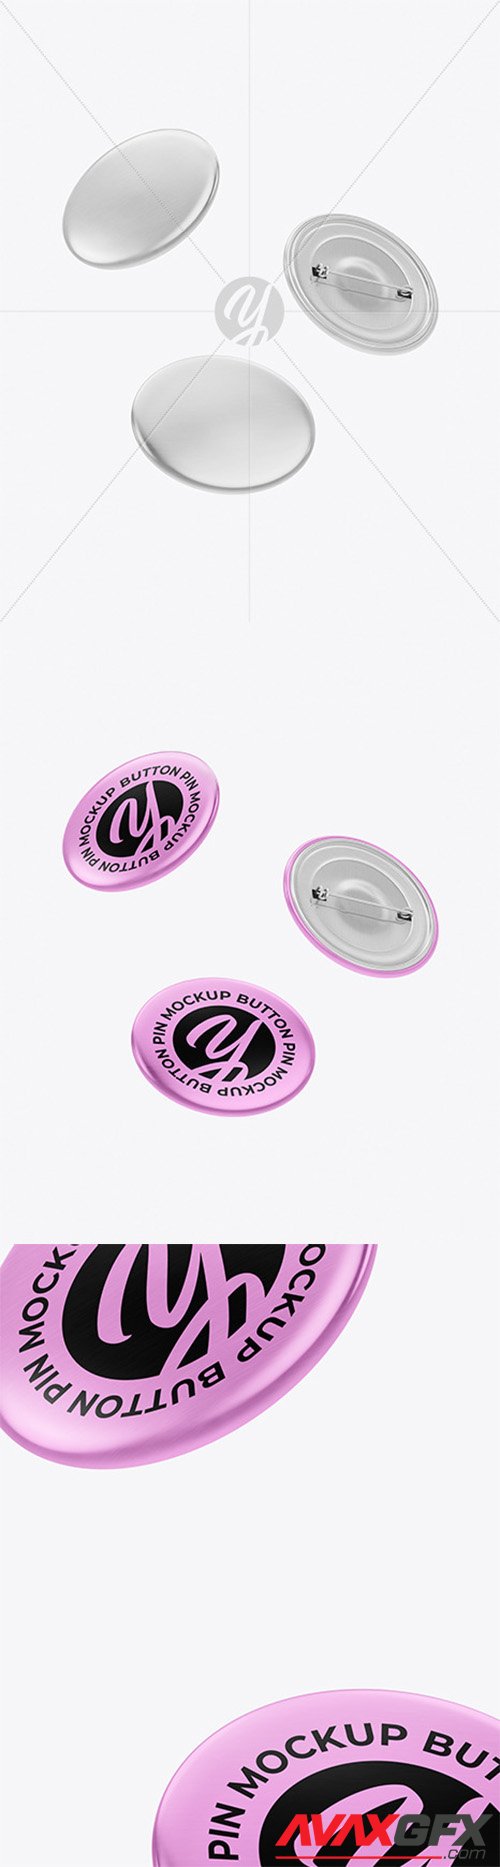 Metallic Button Pins Mockup 85554 TIF